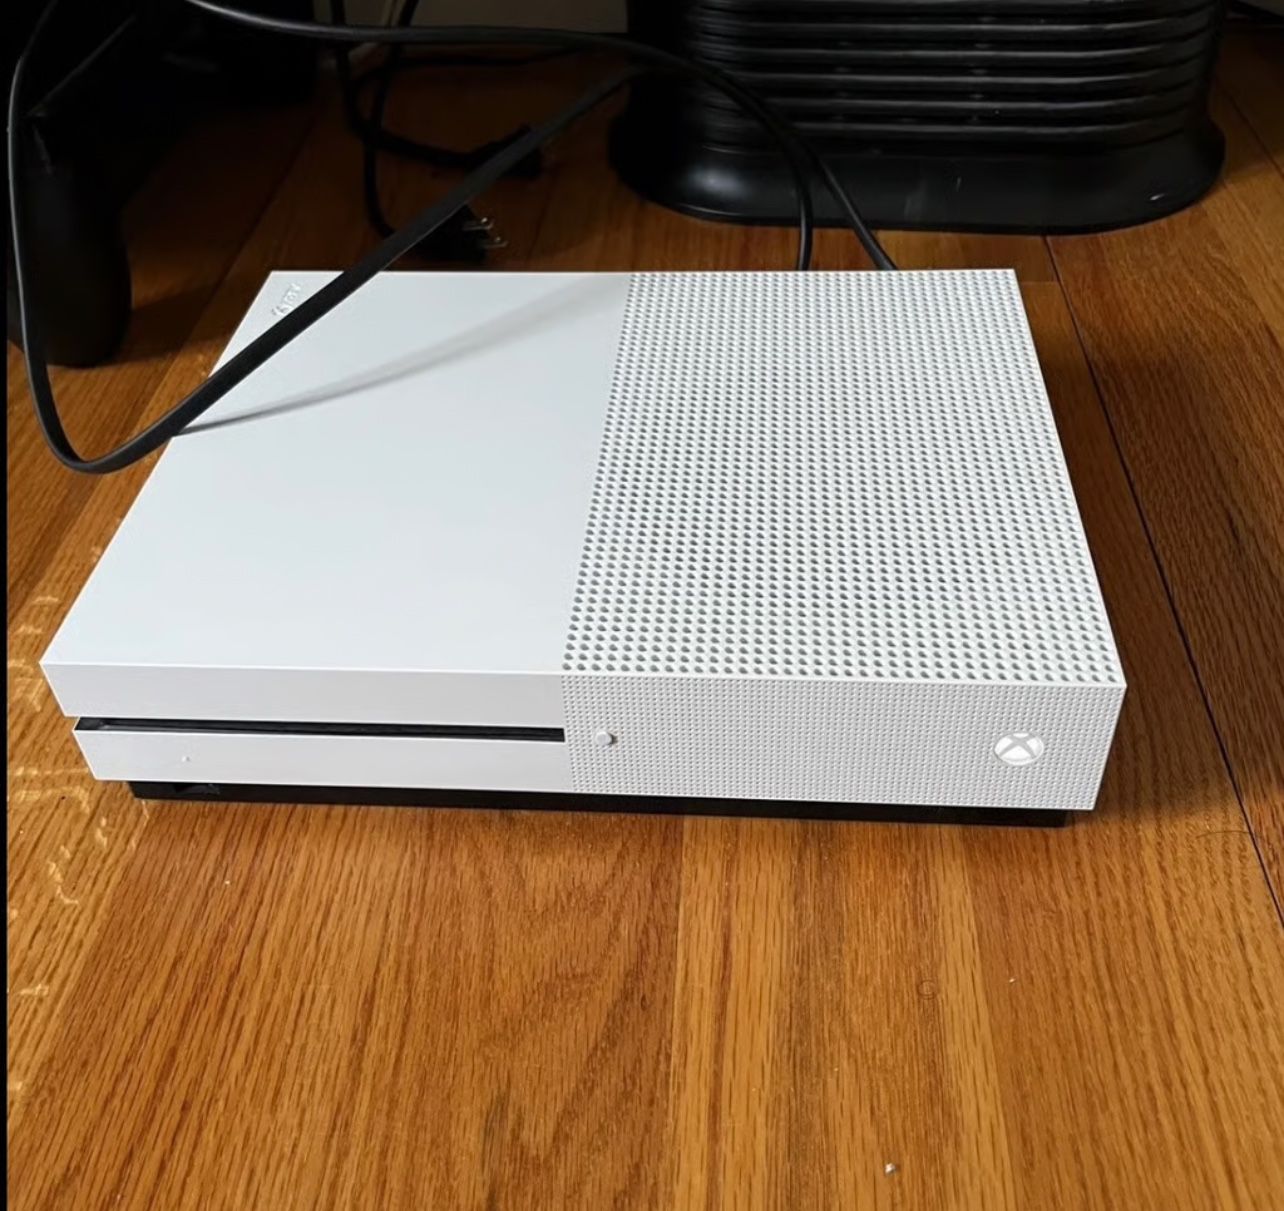 Microsoft Xbox One S Black/White